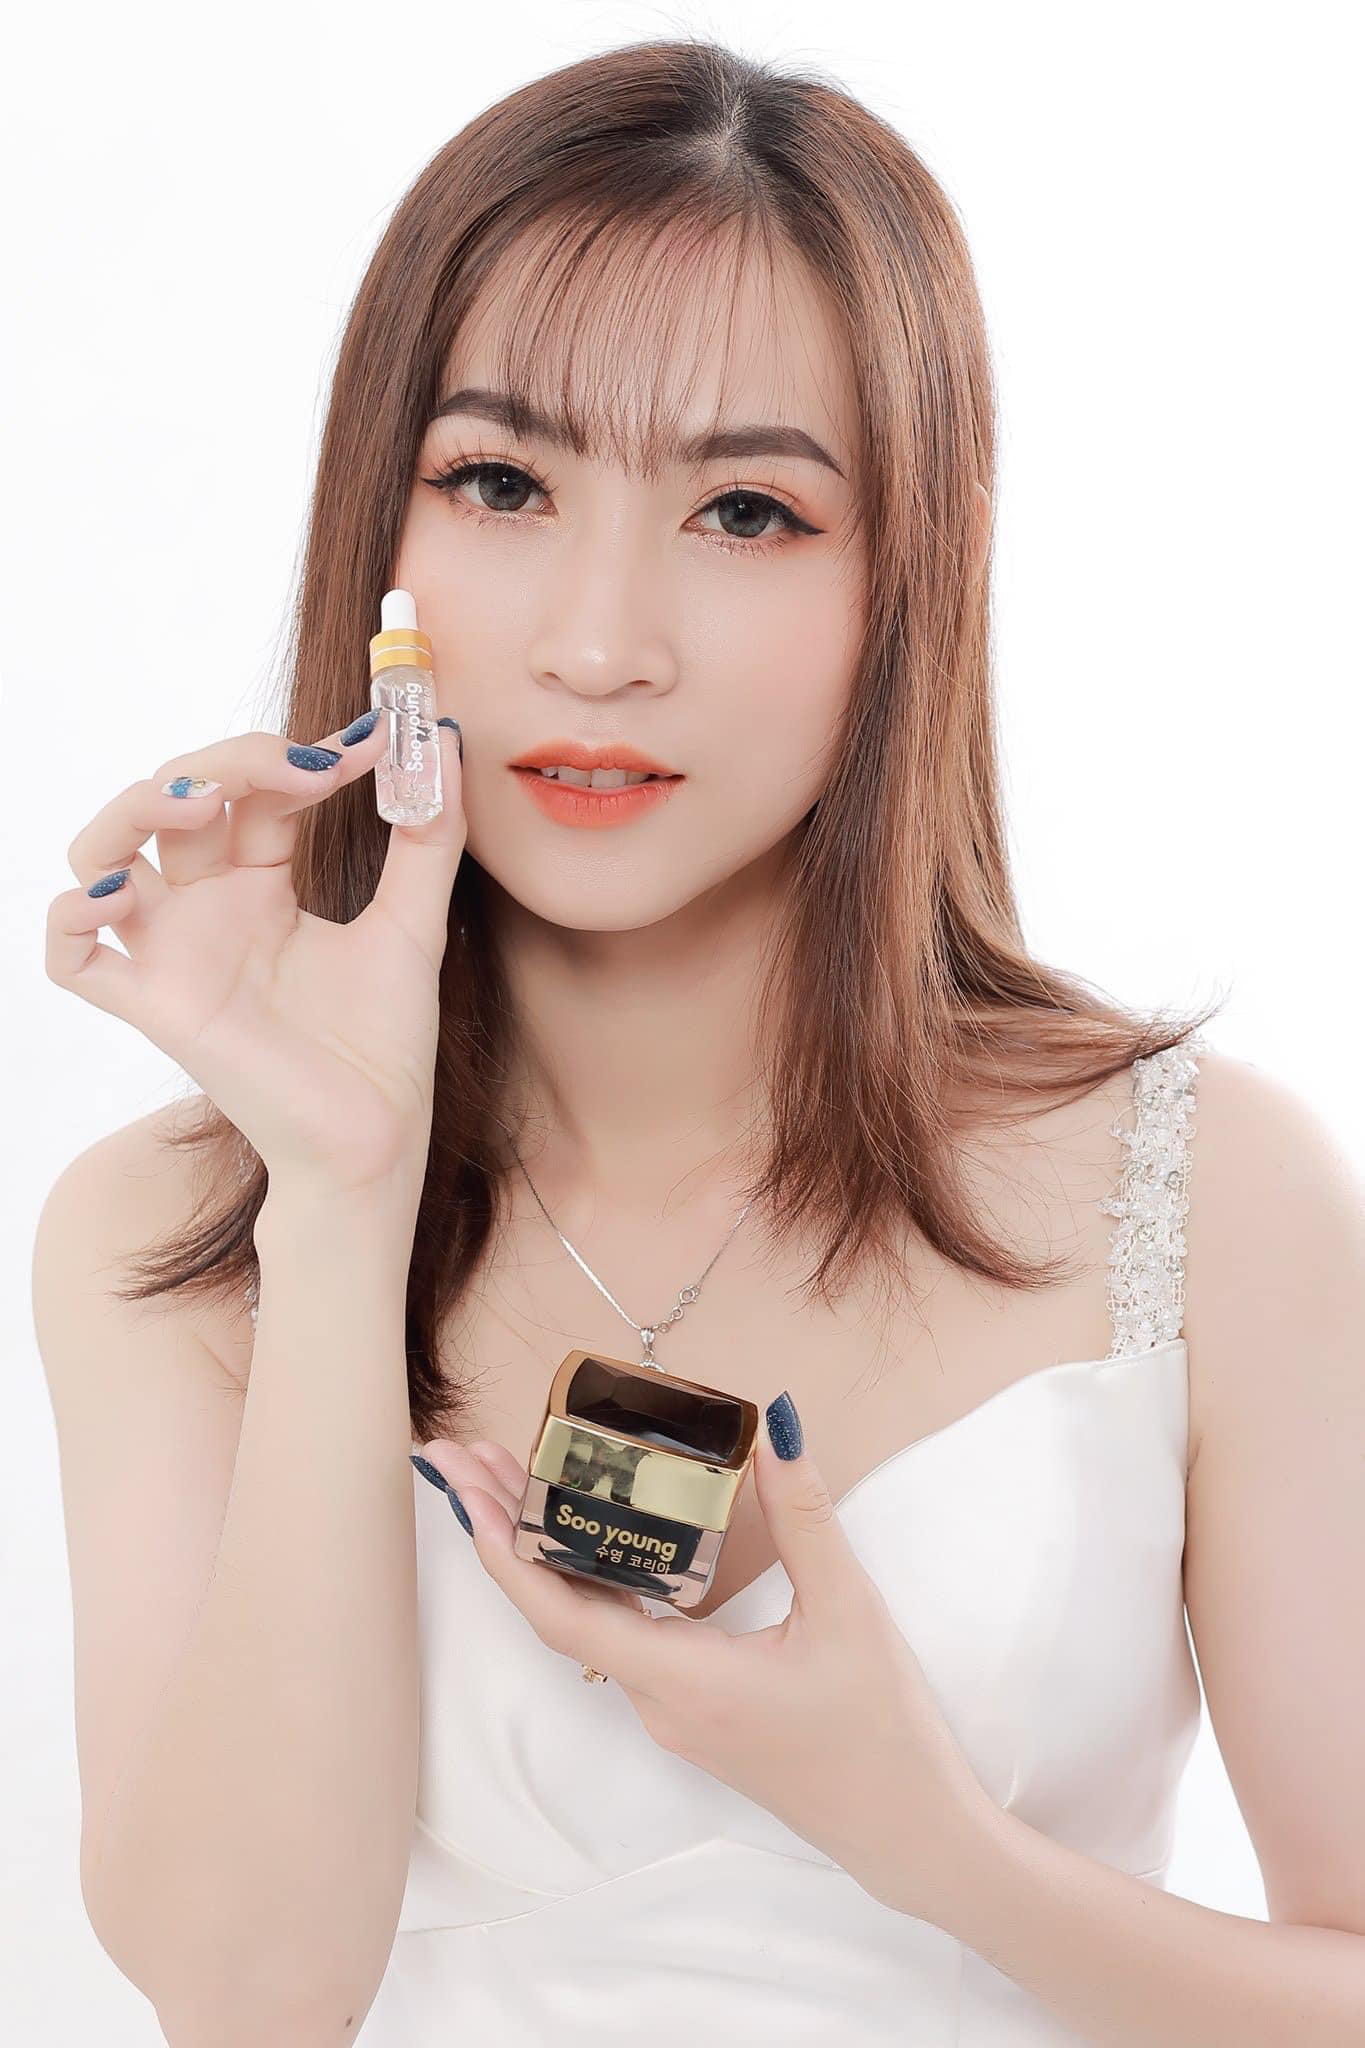 Soo Young Korea High Quality Acne Cream Skin Care Treatment Set